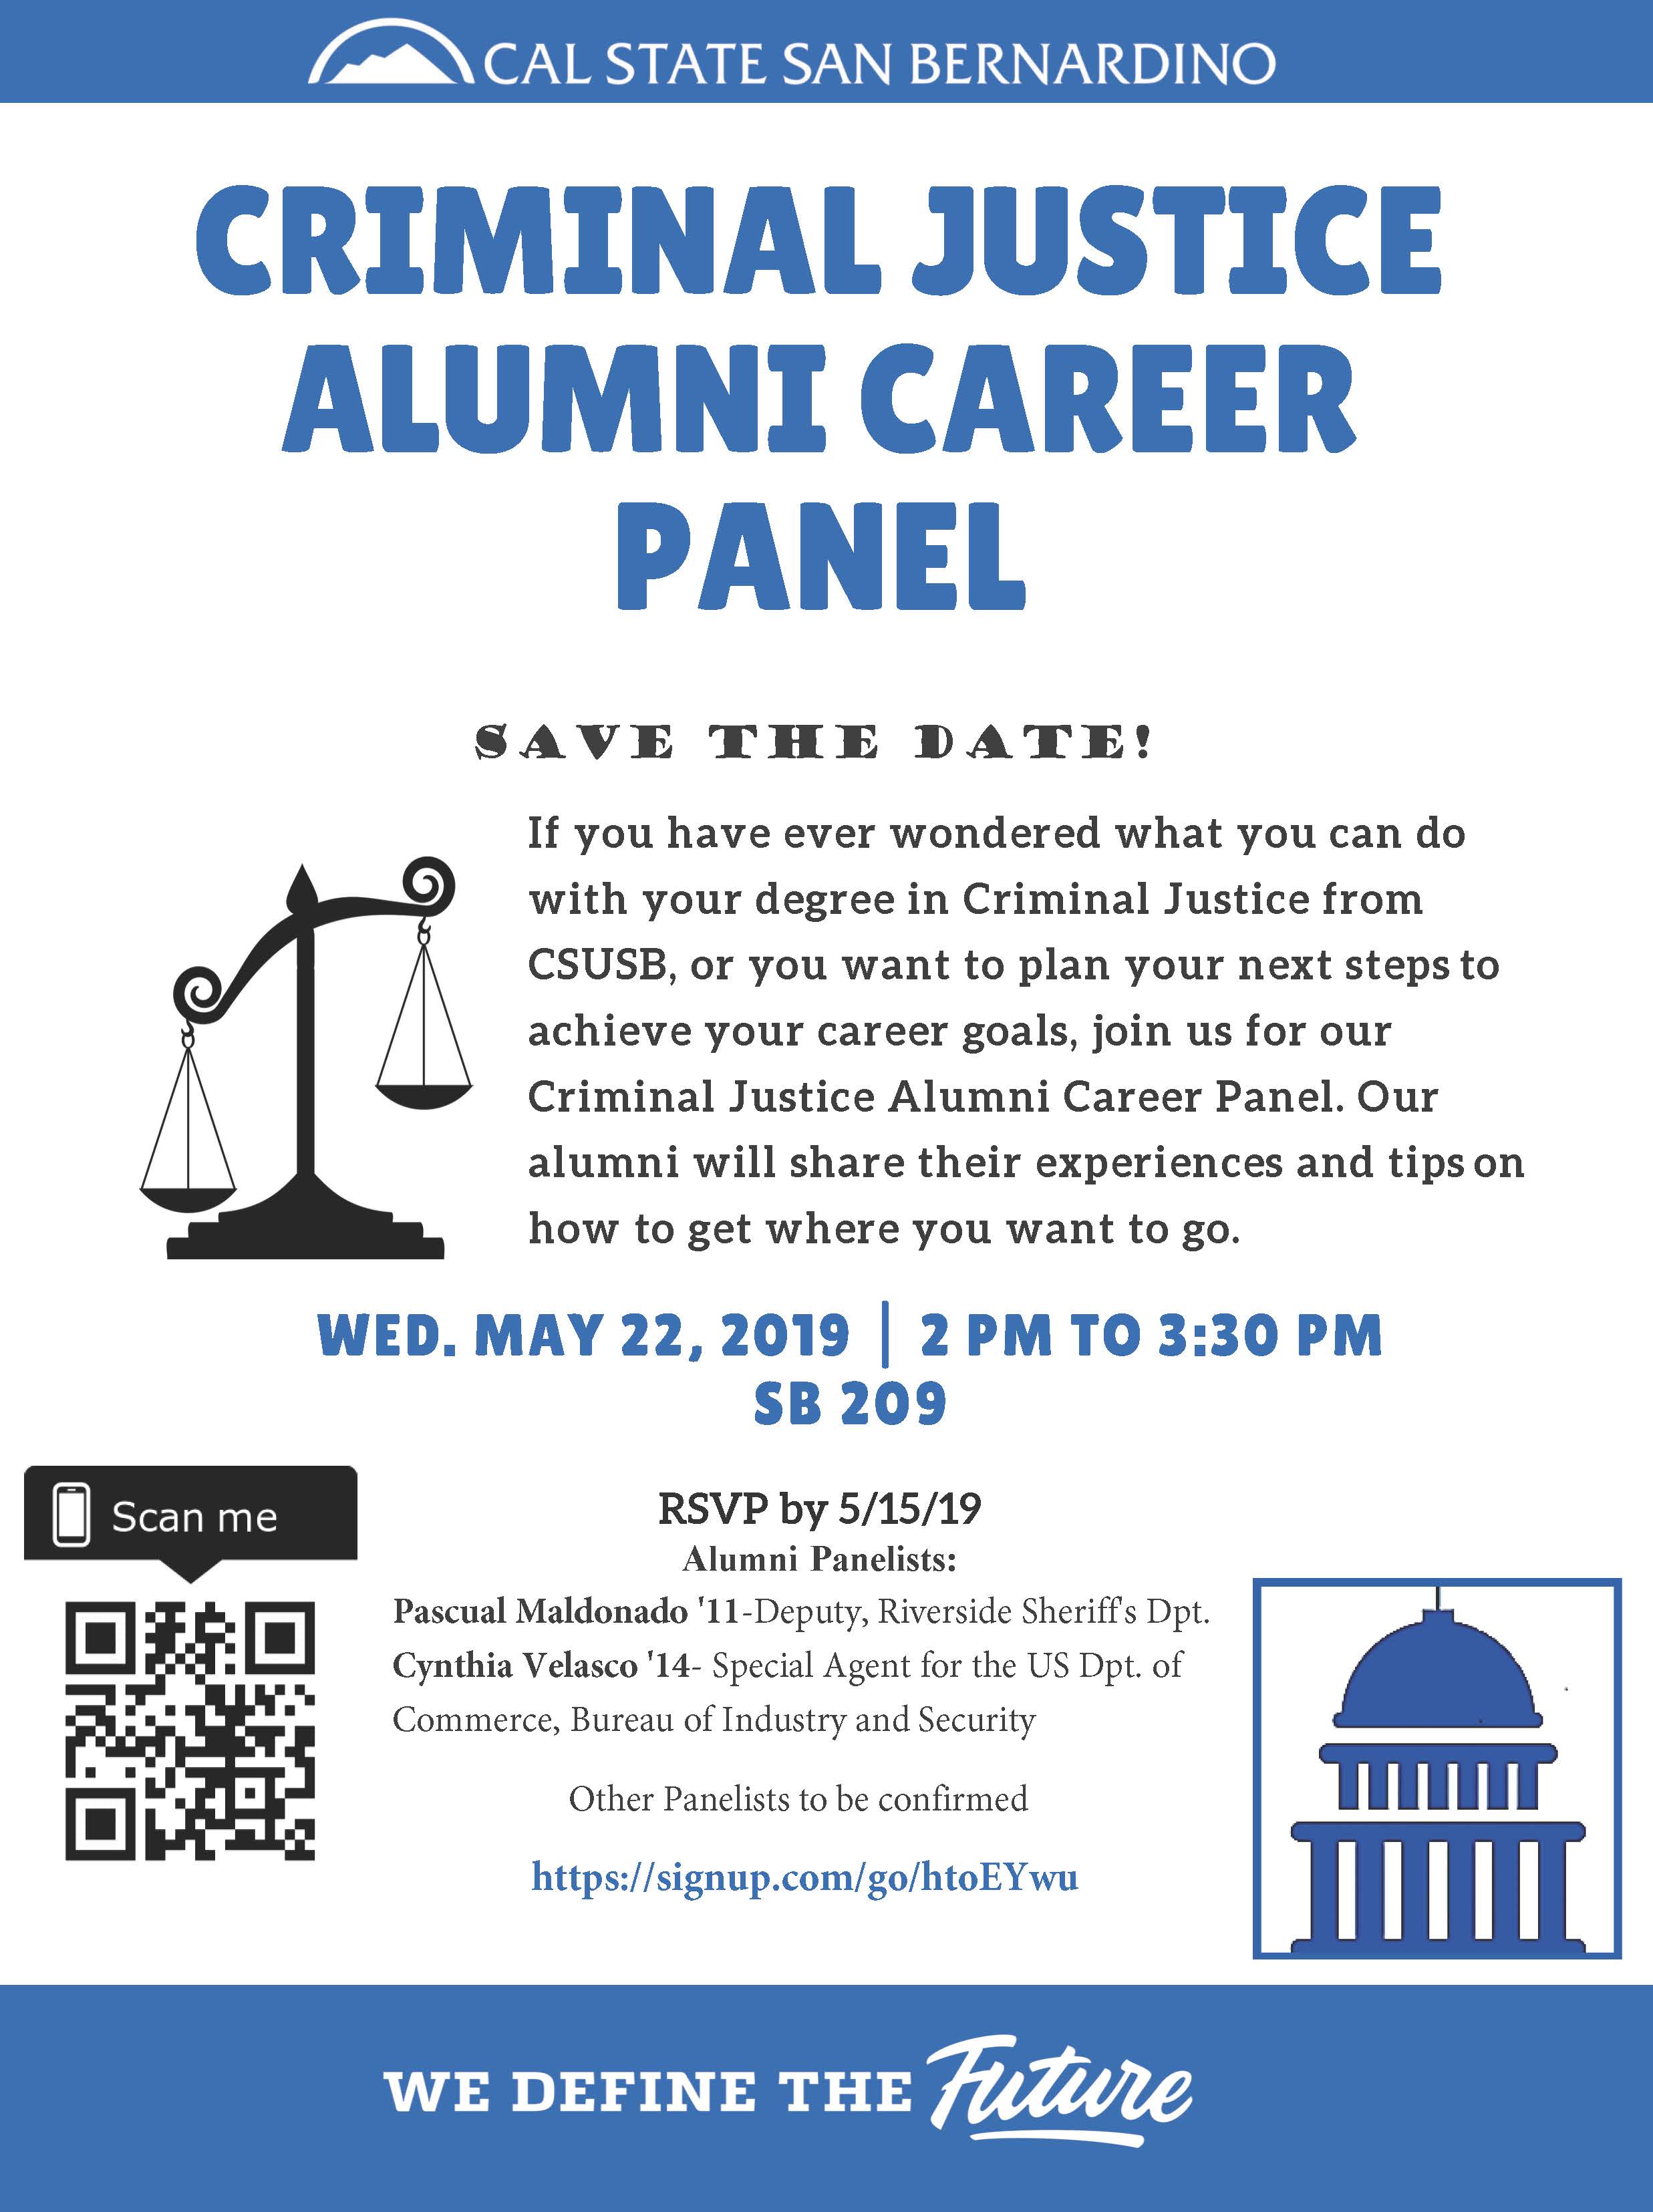 Criminal justice alumni career panel set for May 22